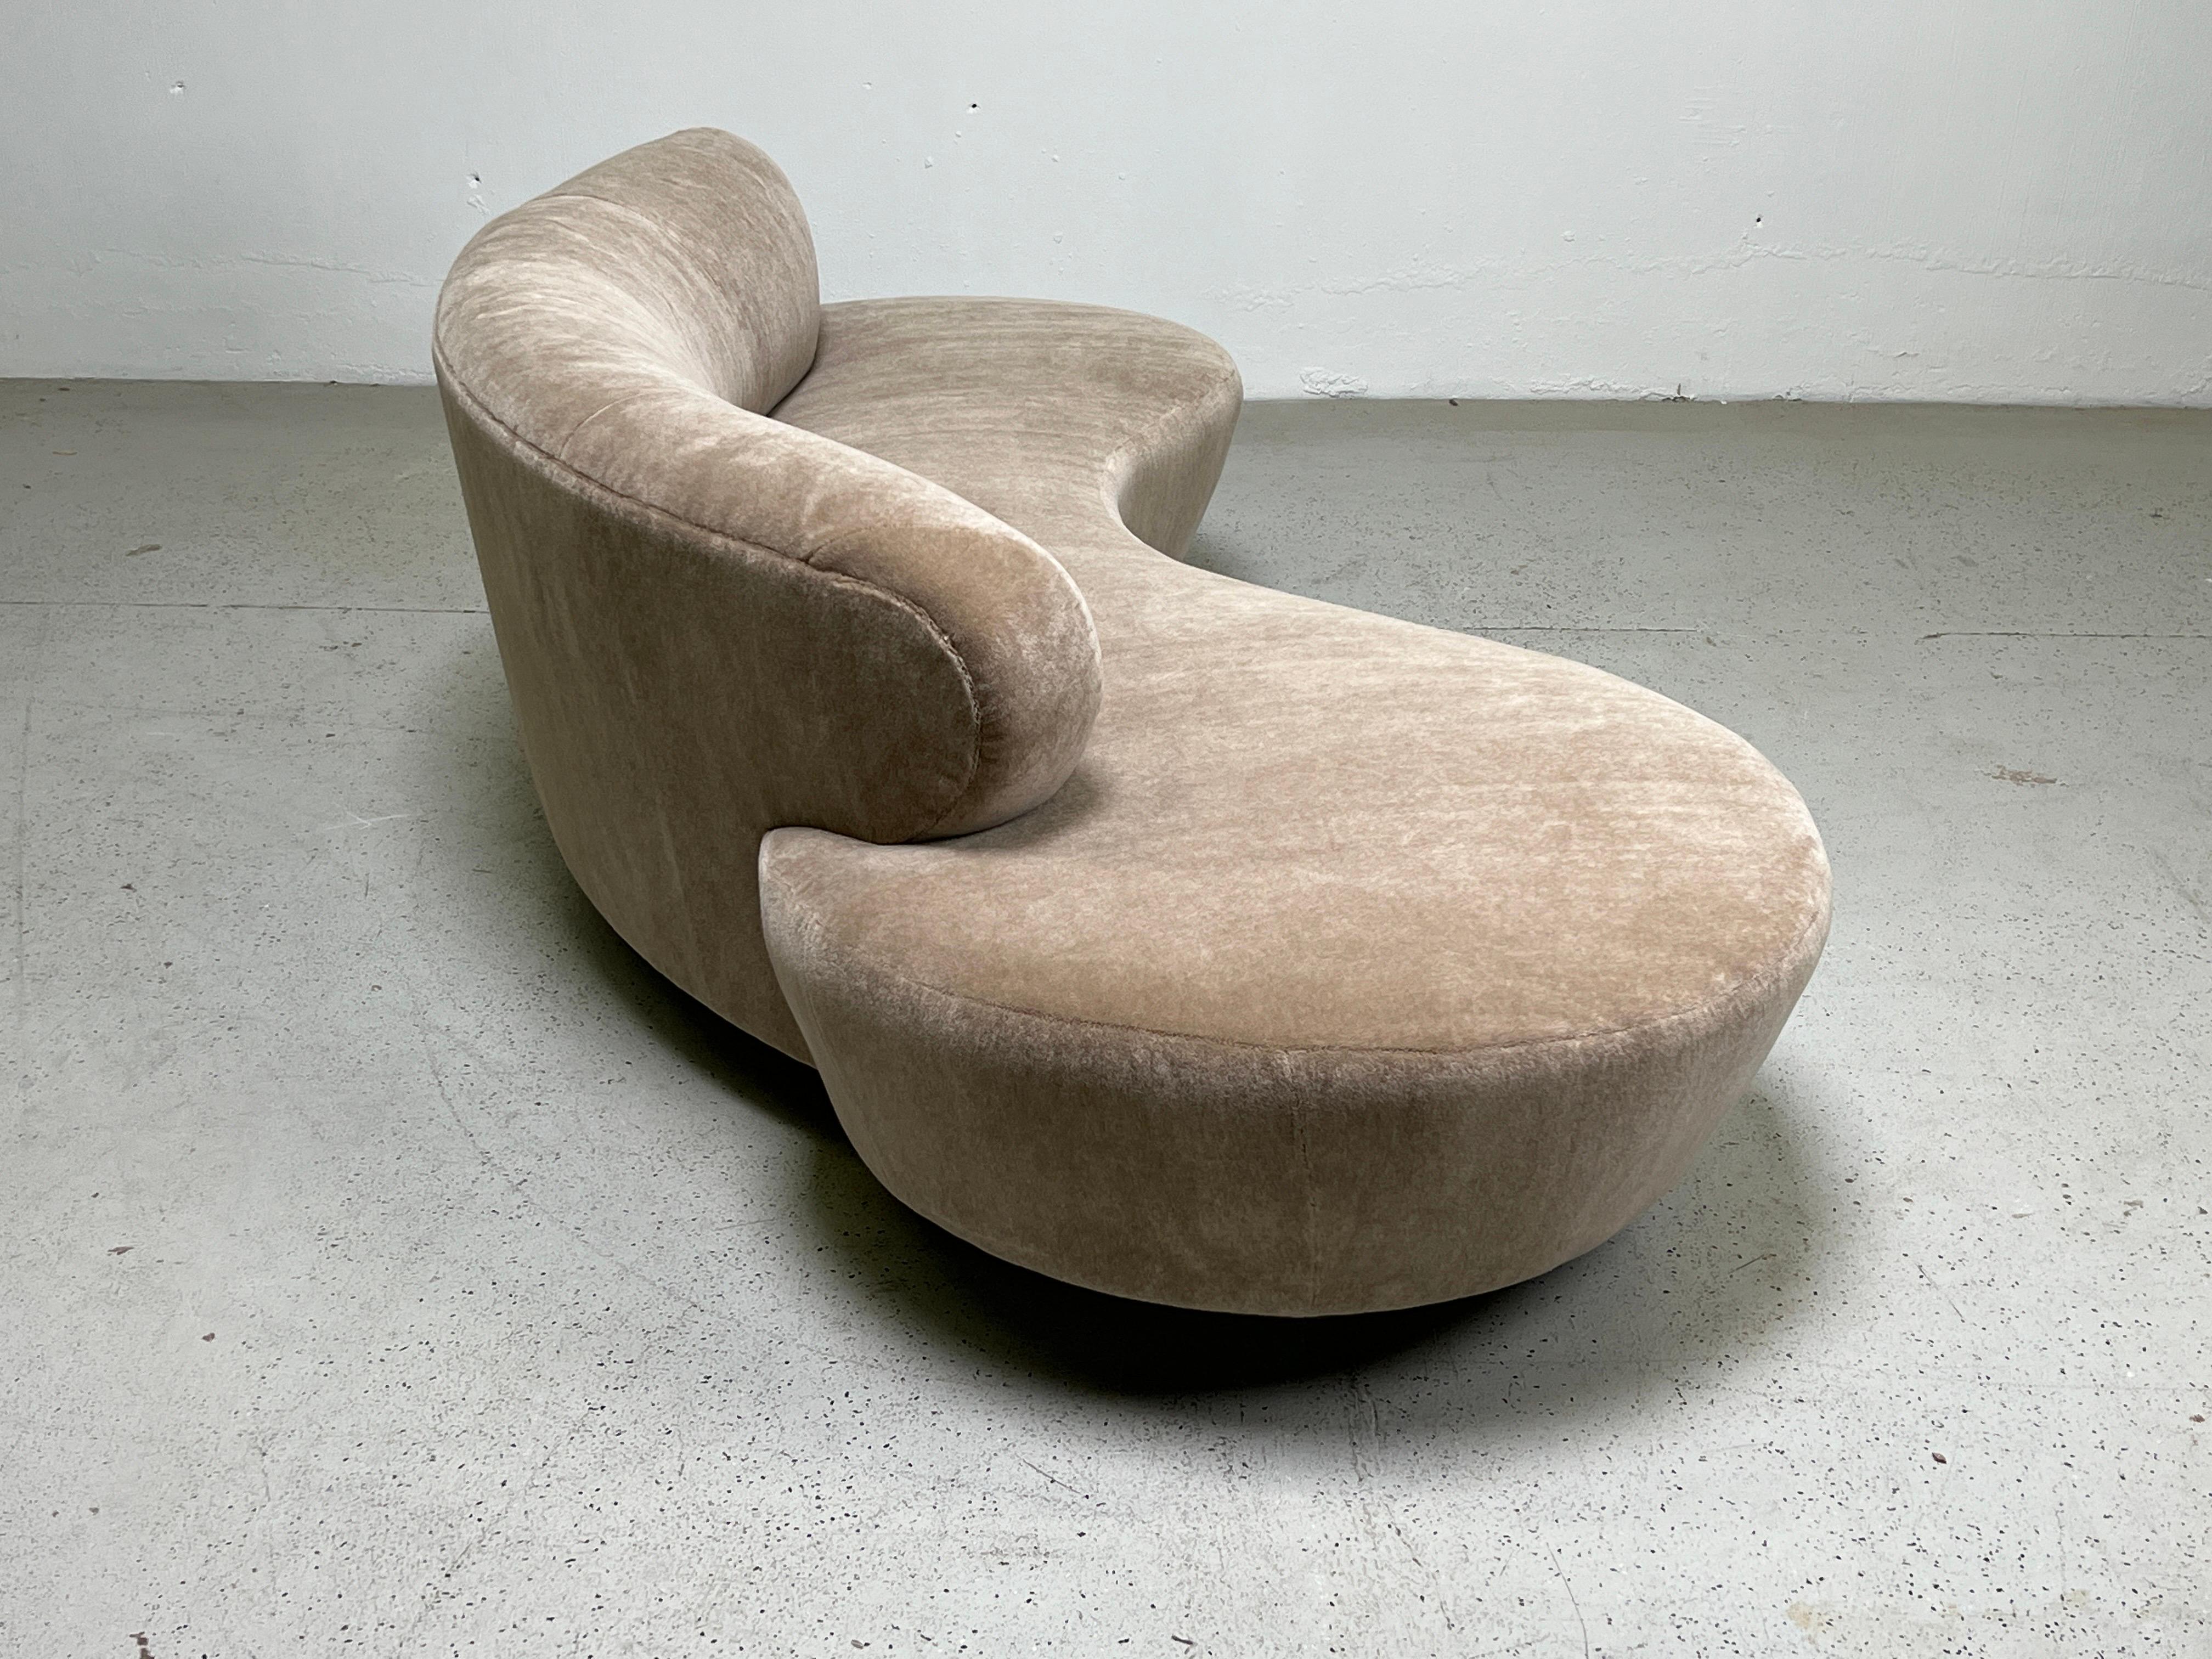 Mohair Sofa by Vladimir Kagan for Directional